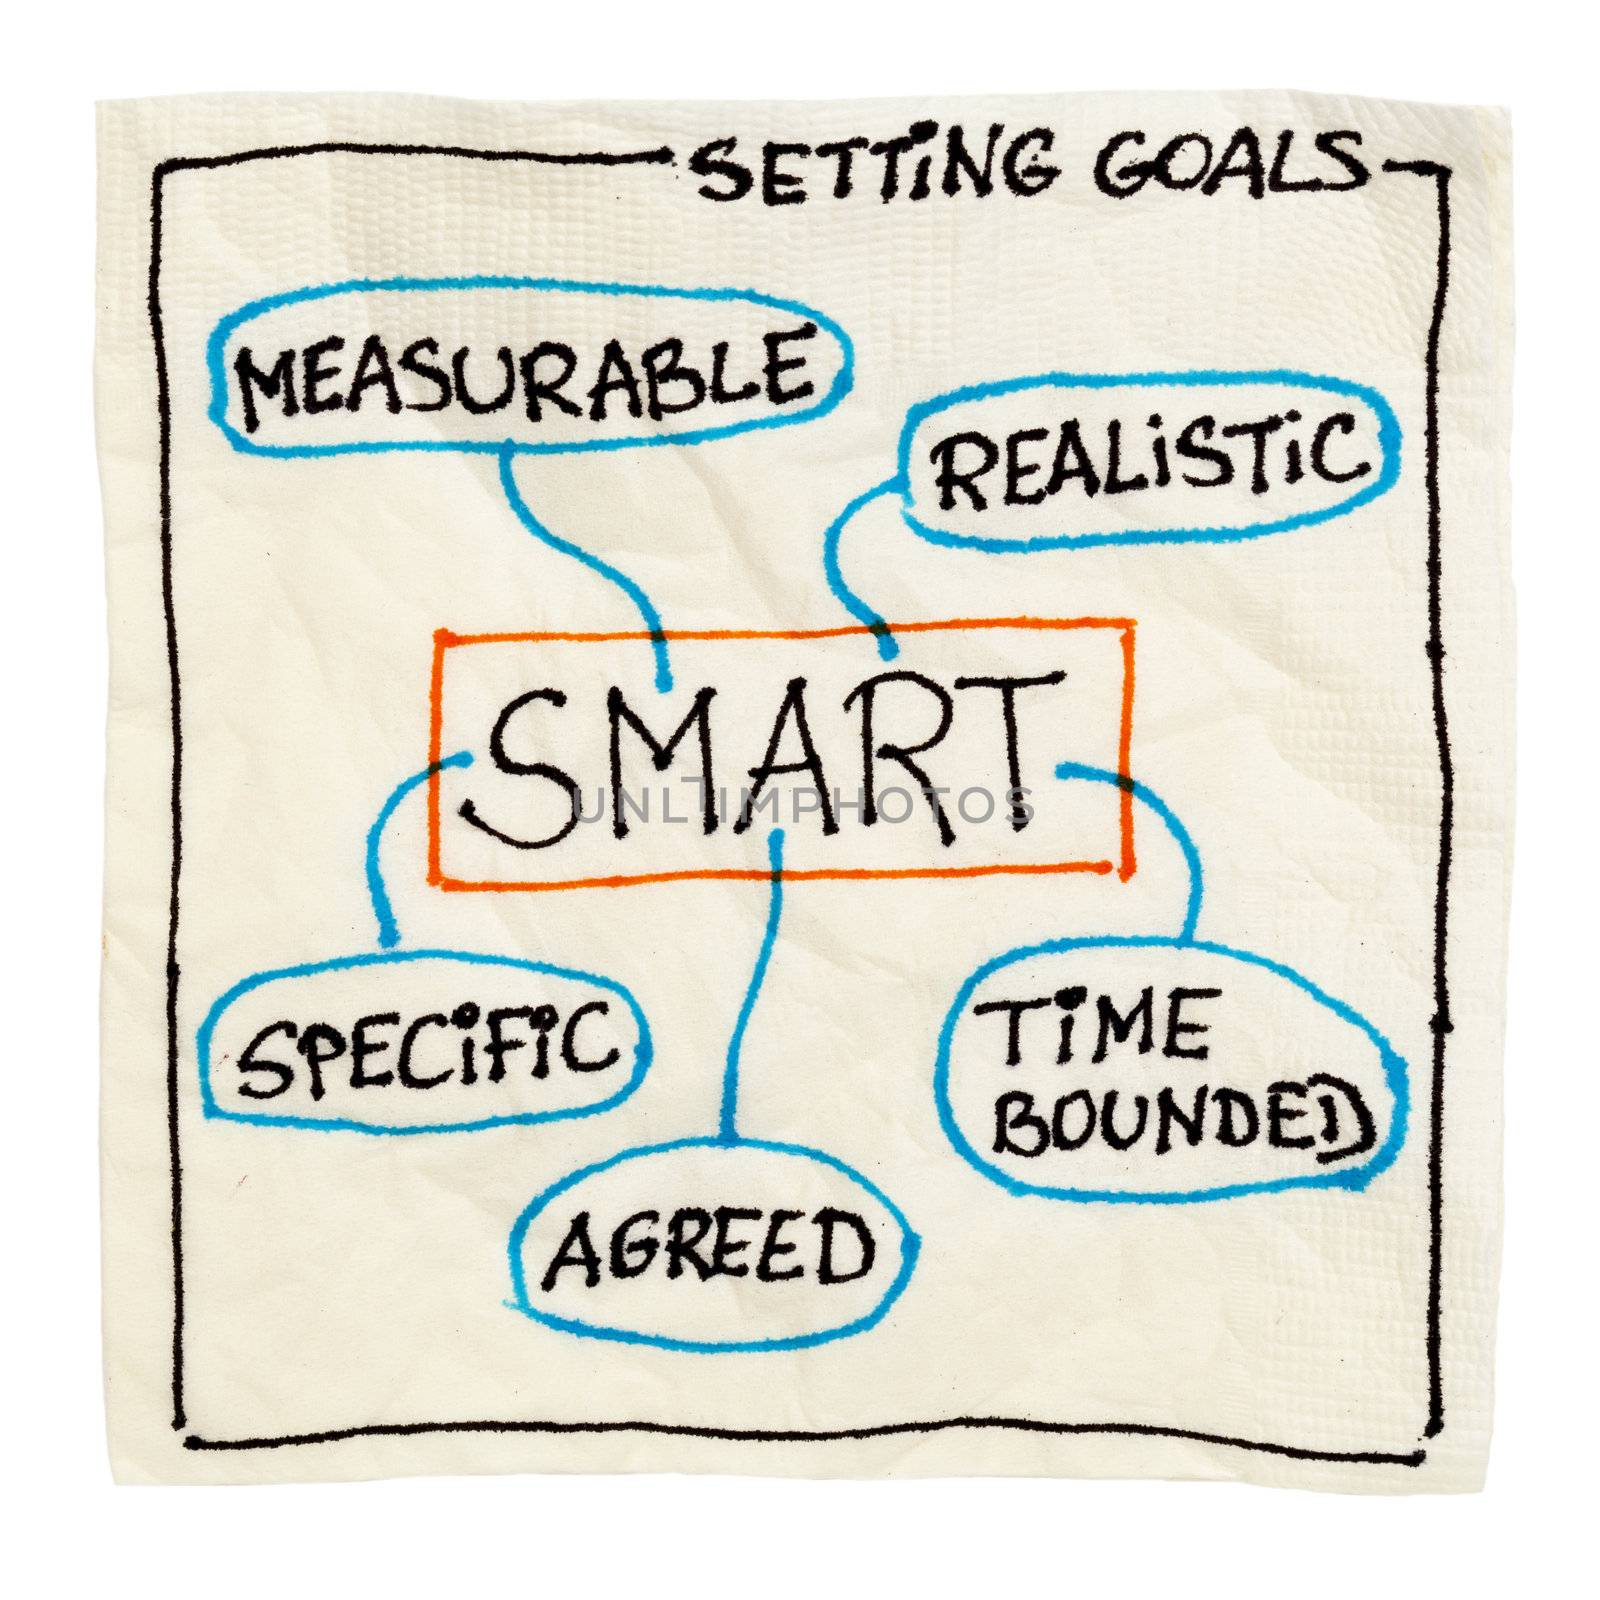 smart goal setting  by PixelsAway